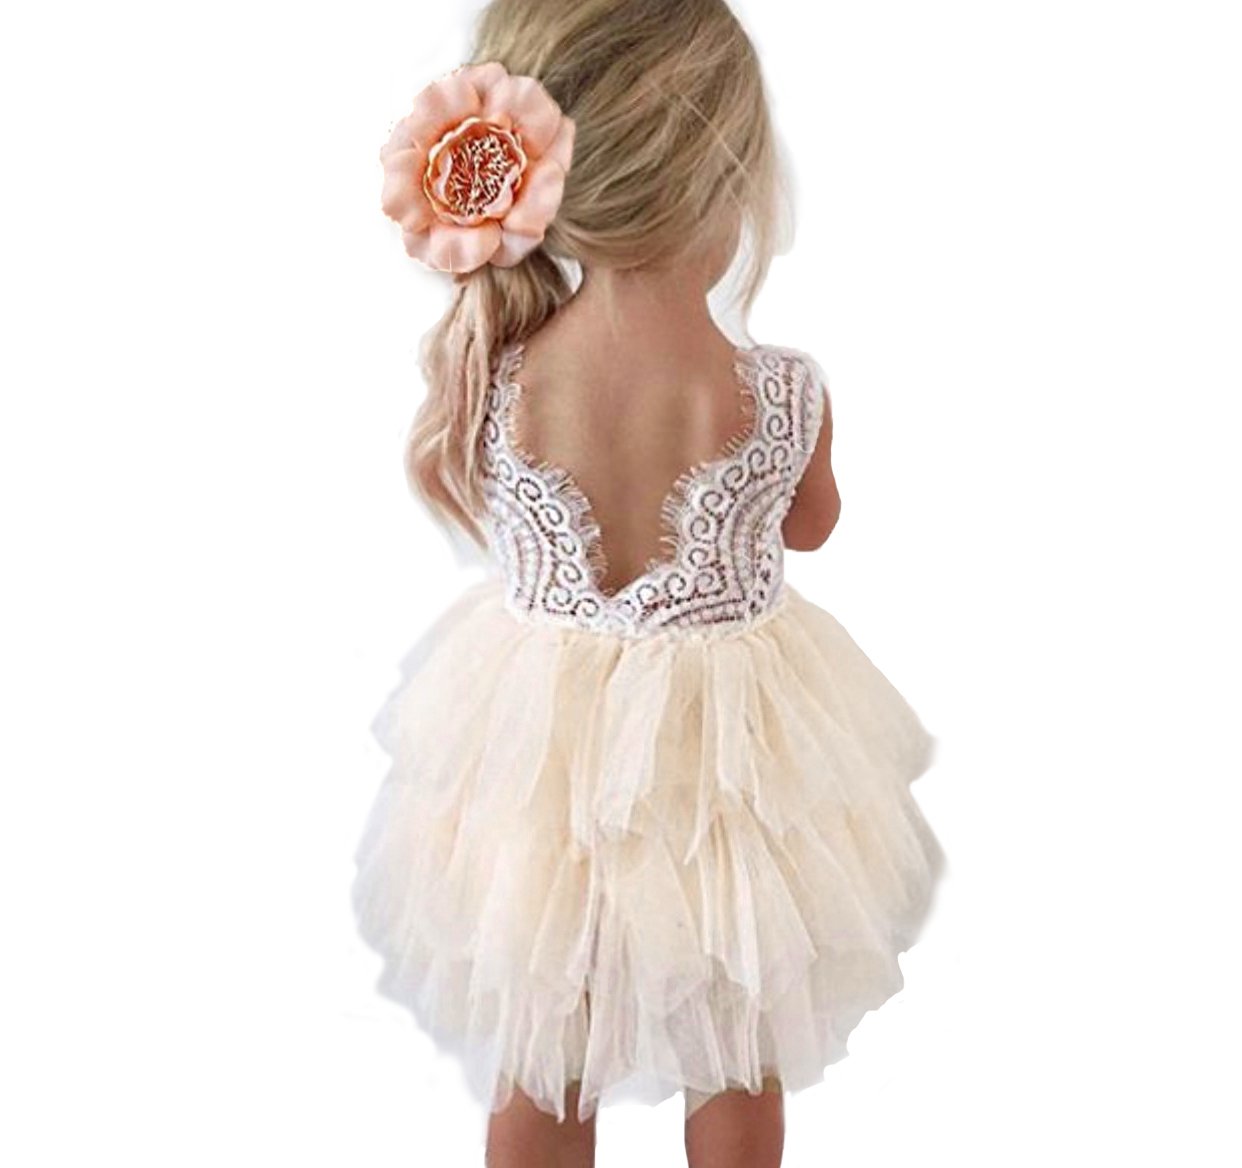 Backless A-line Lace Back Flower Girl Dress (2T, Ivory)